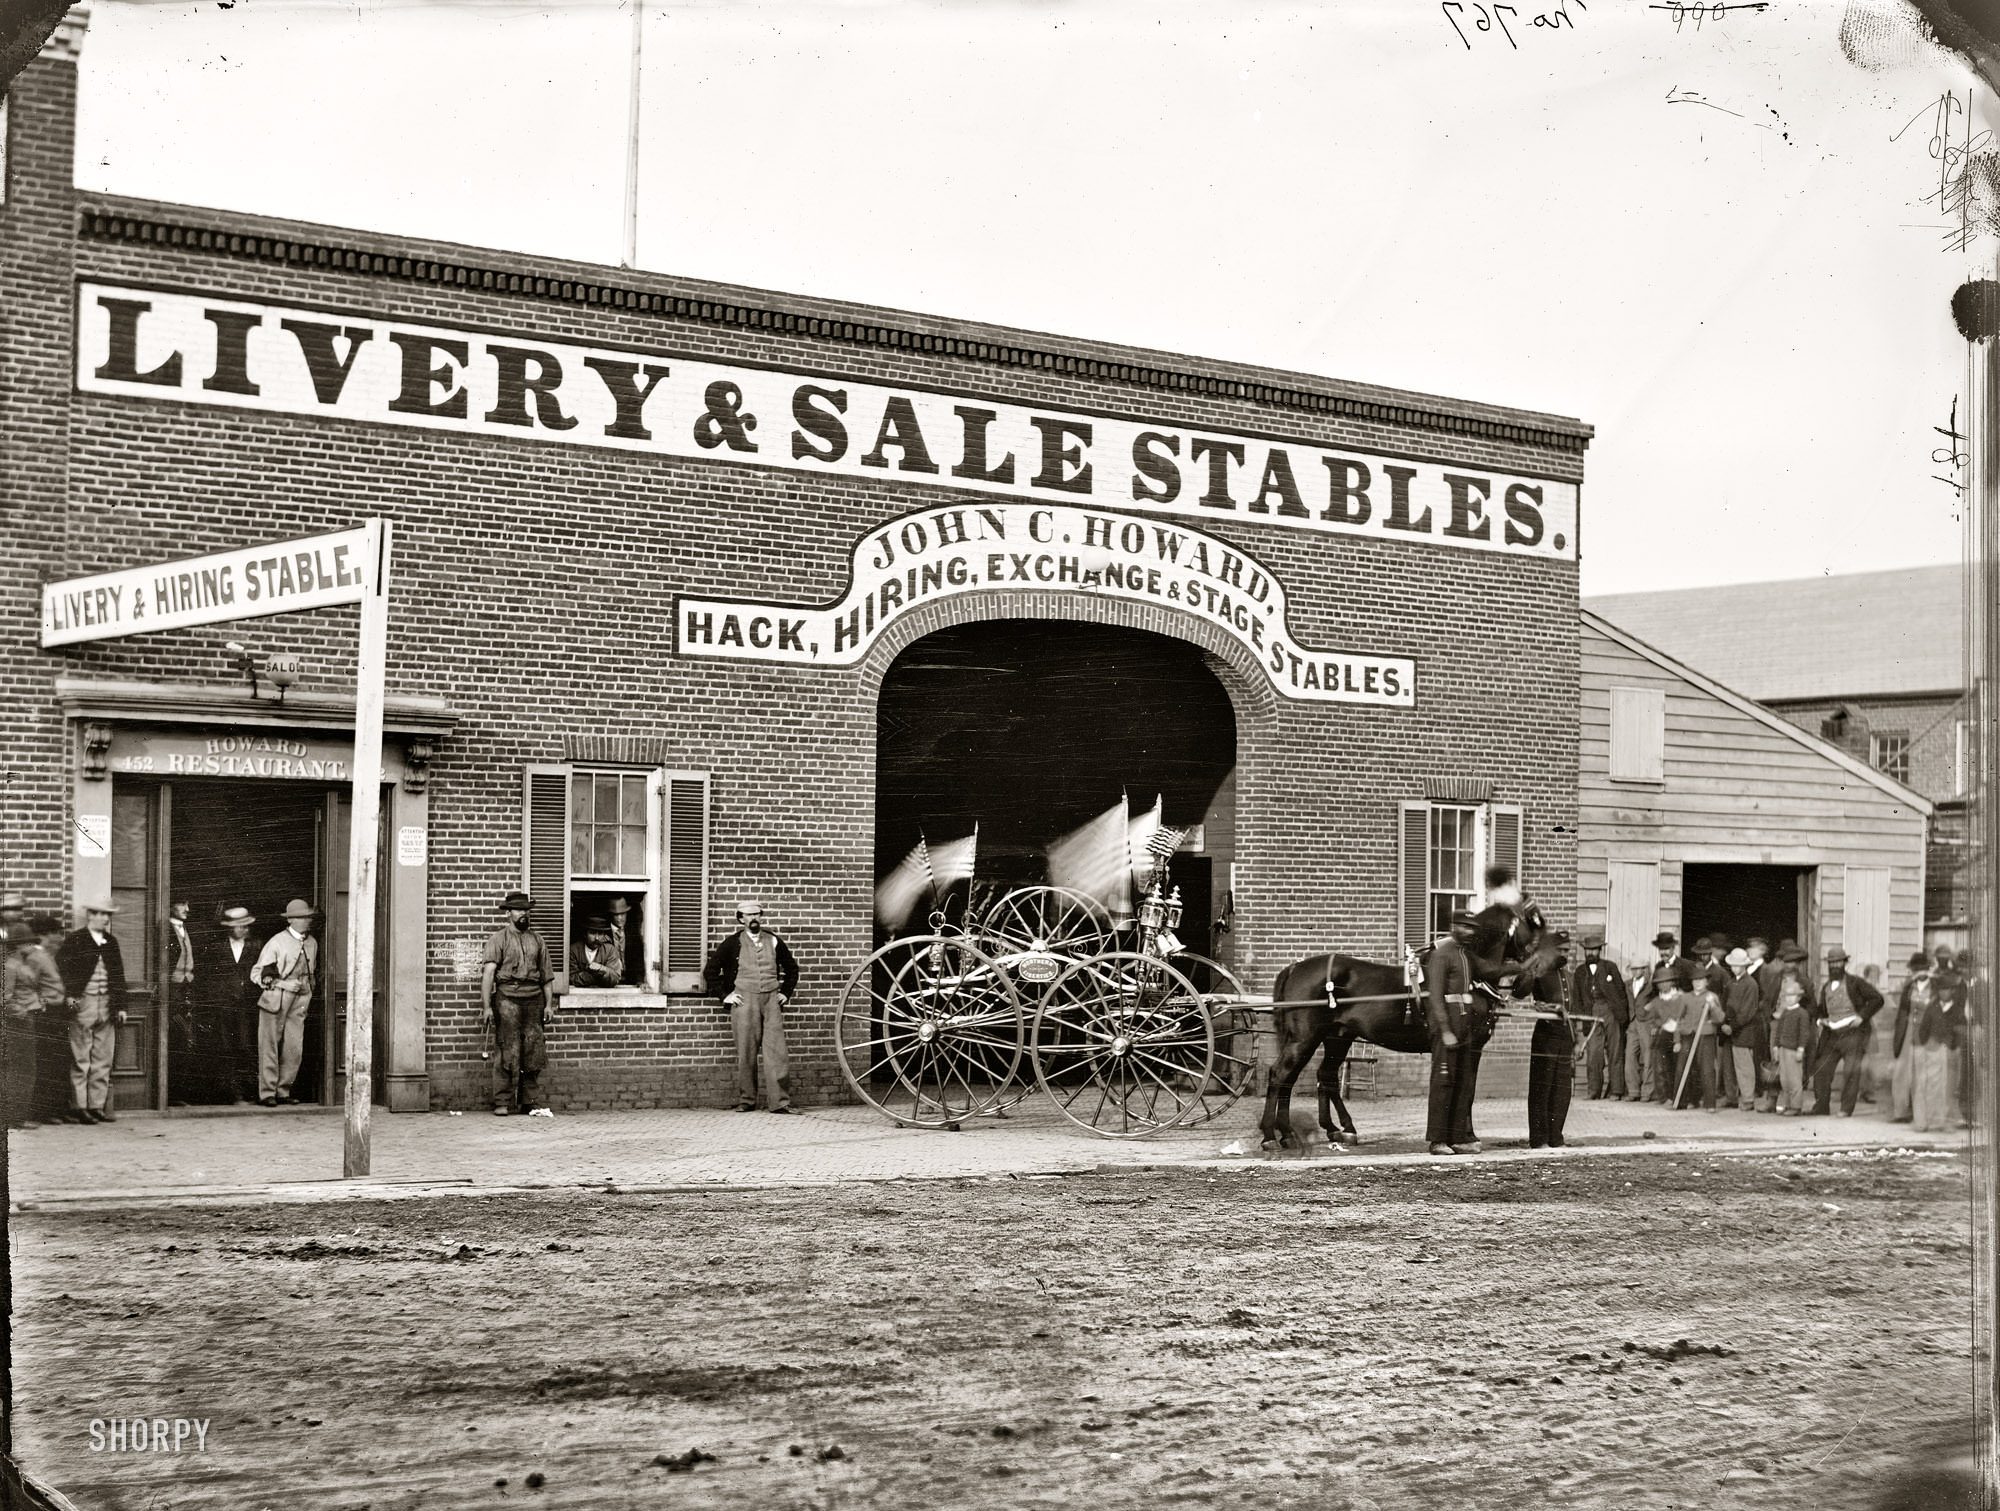 John C. Howard's stable on G Street between 6th and 7th, where John H. Surratt kept horses before leaving town on April, Washington, D.C., 1865.